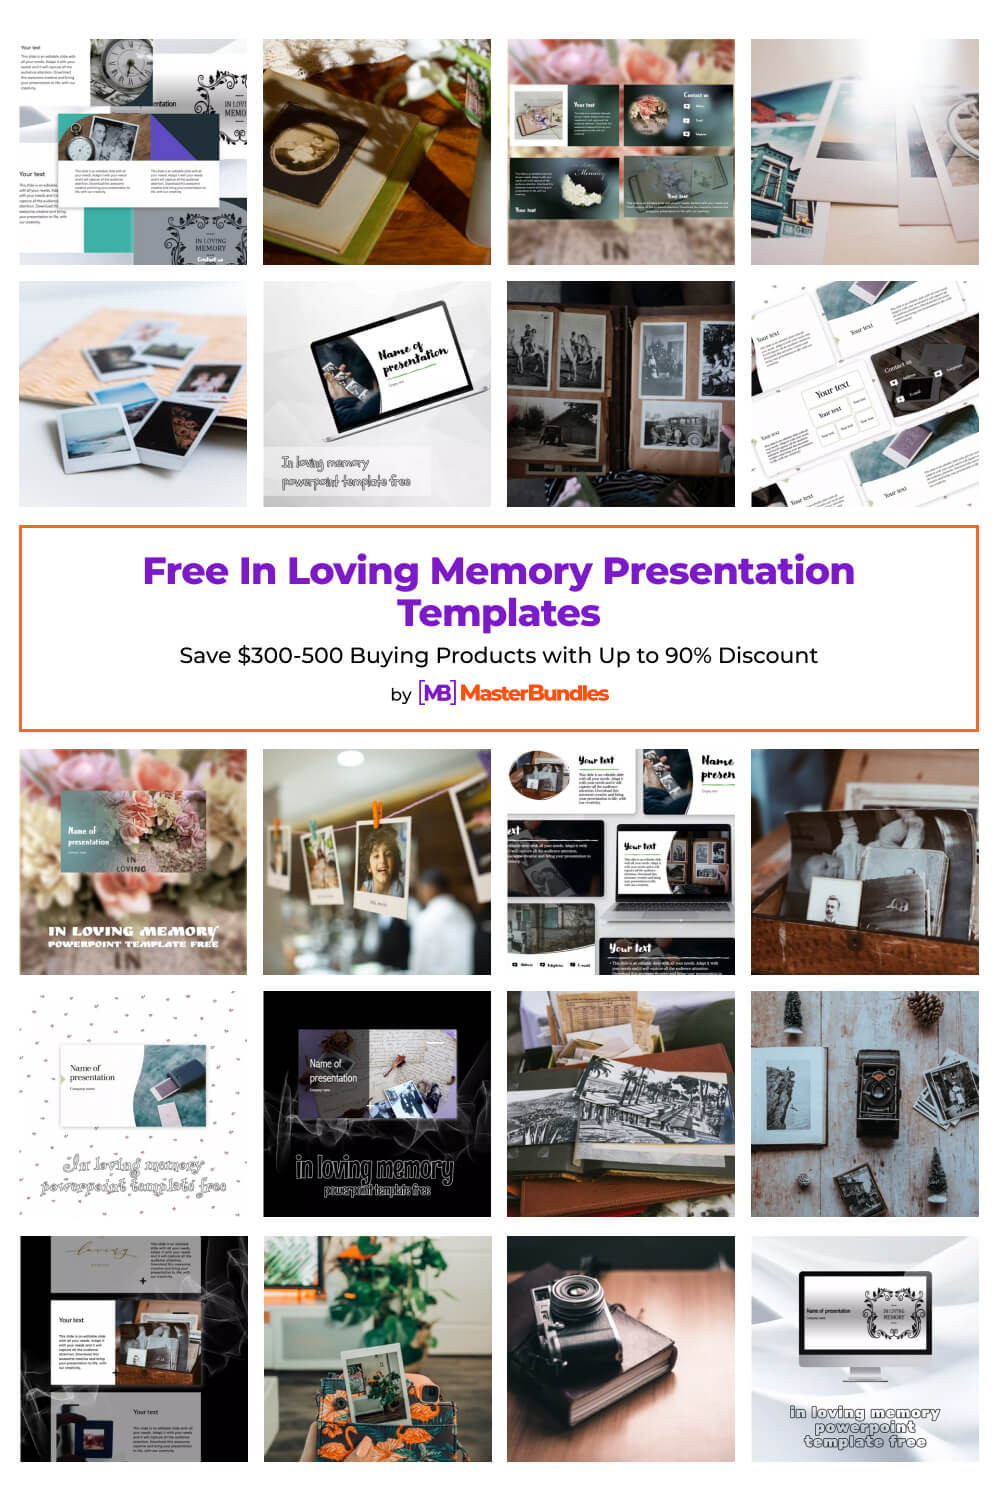 free in loving memory presentation templates pinterest image.